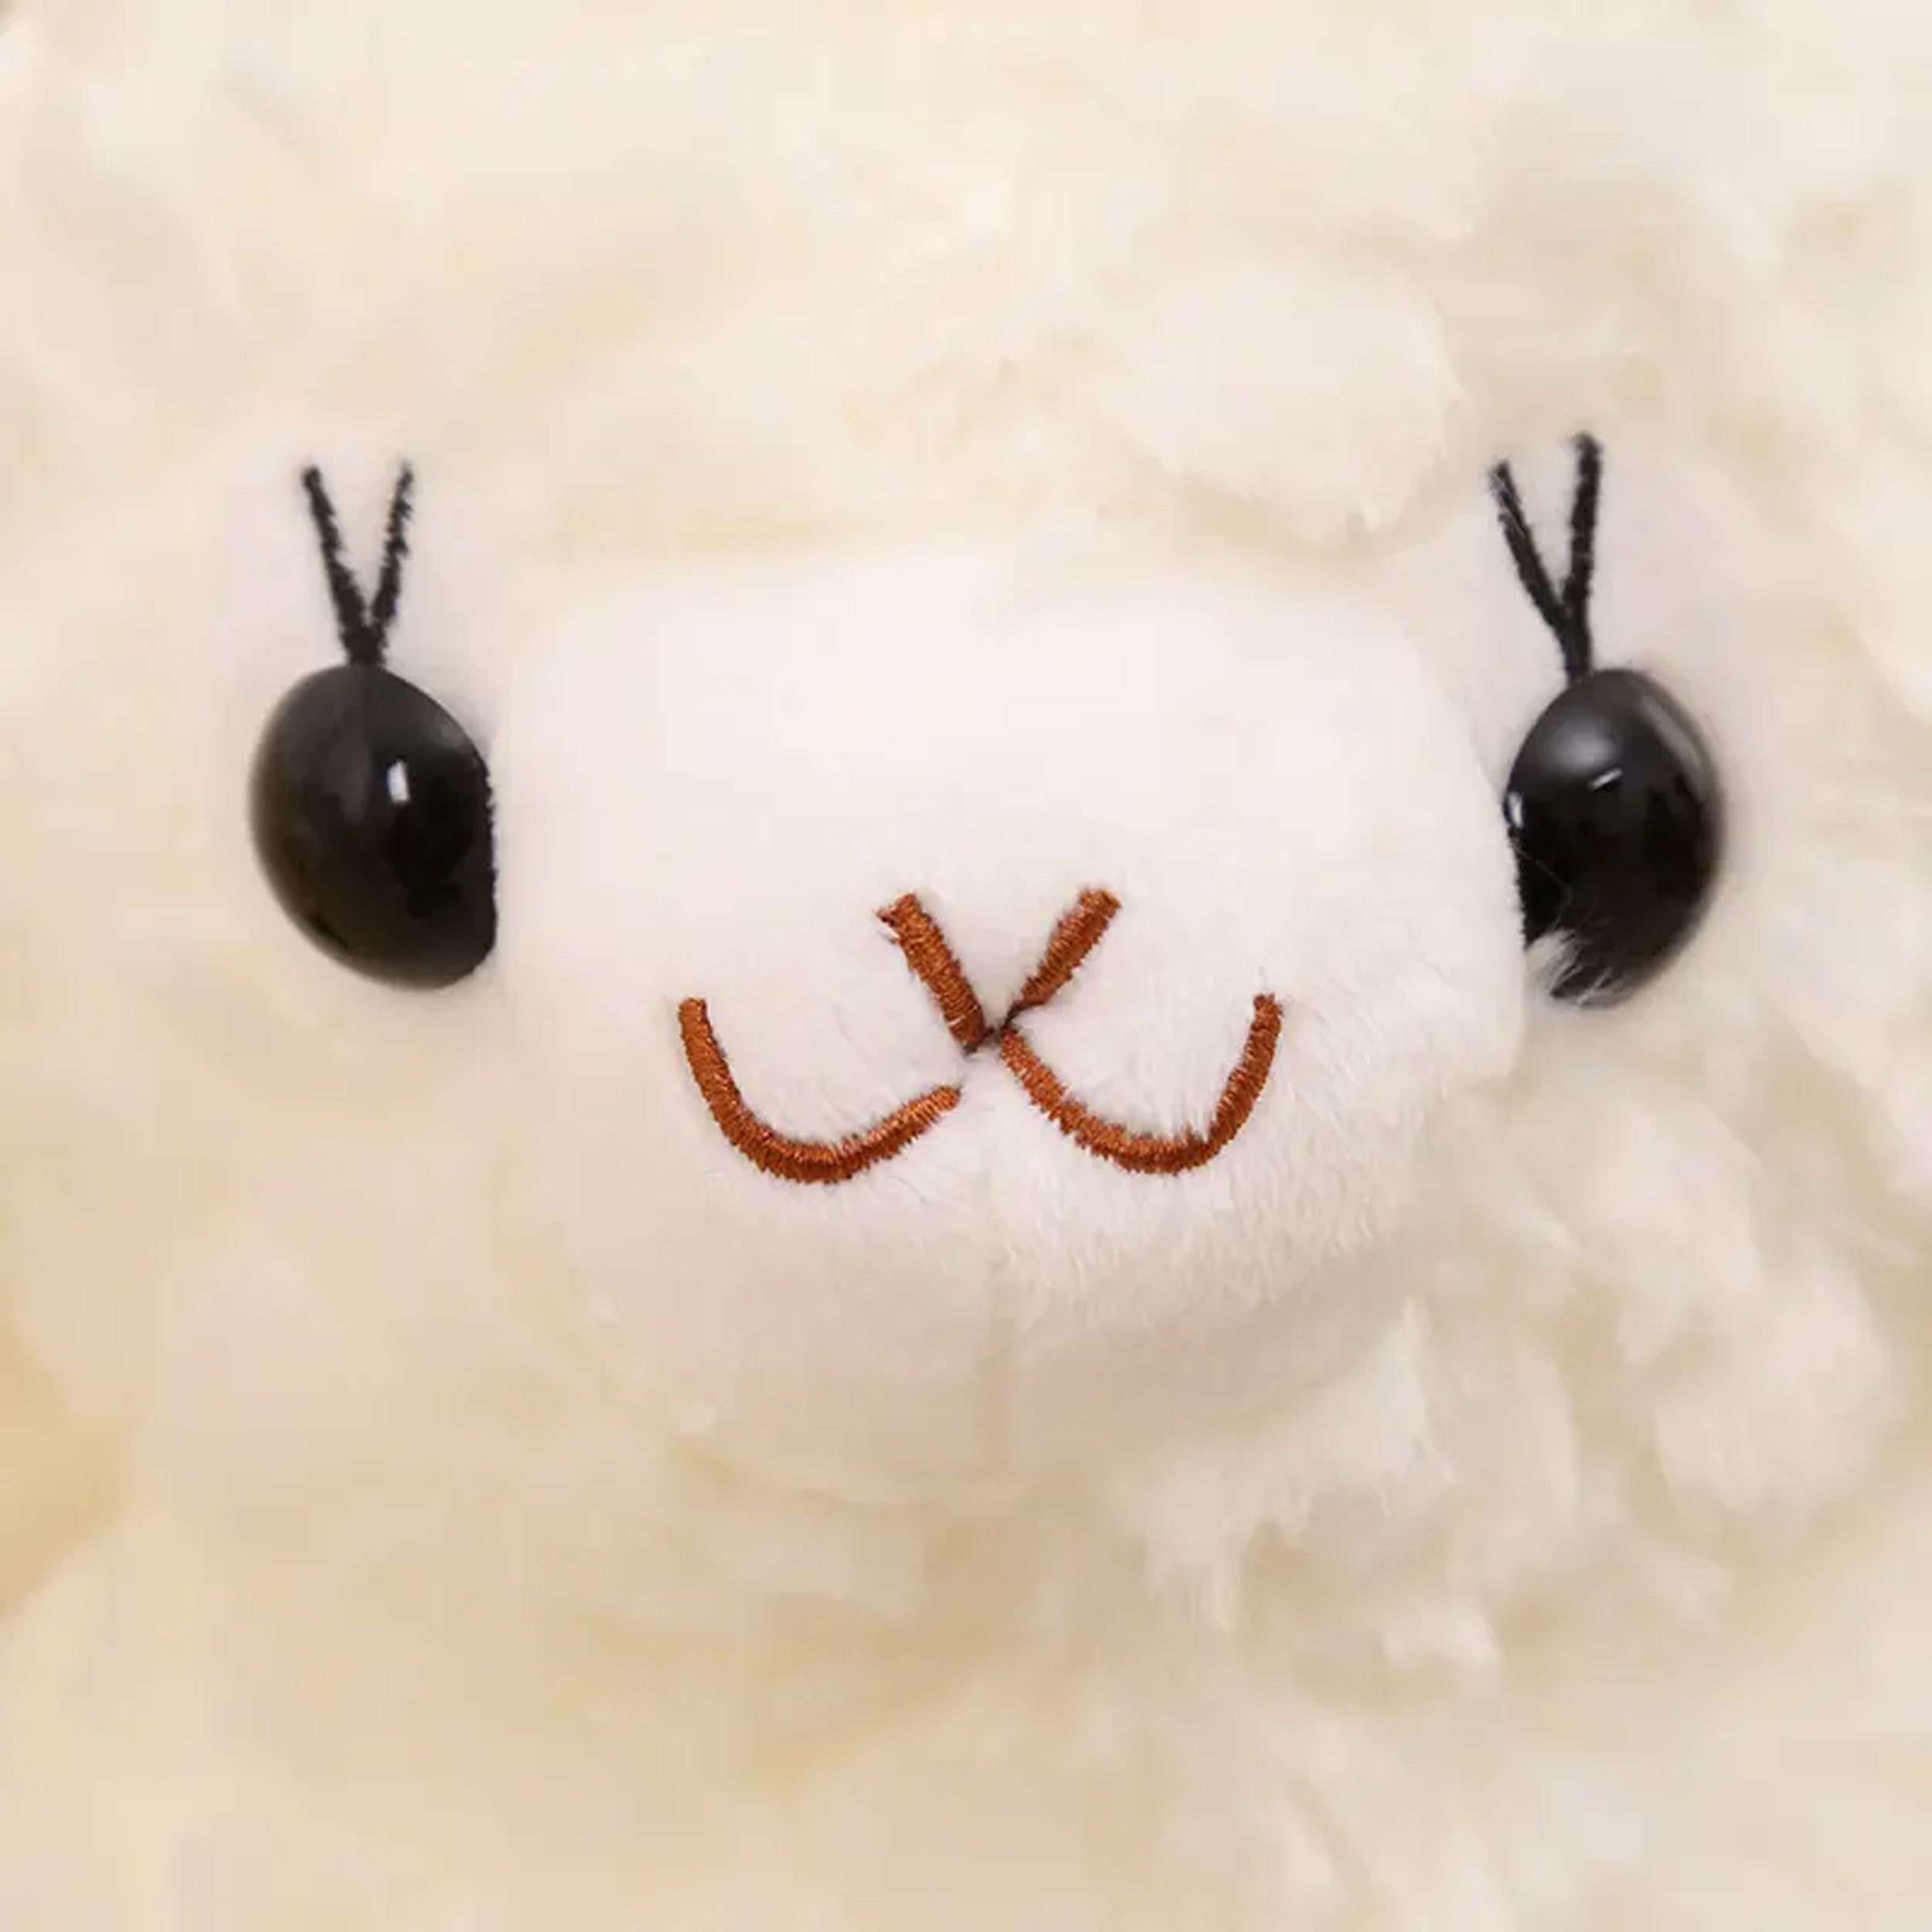 Baby Cutie Little Lamb Stuffed Plush Toy